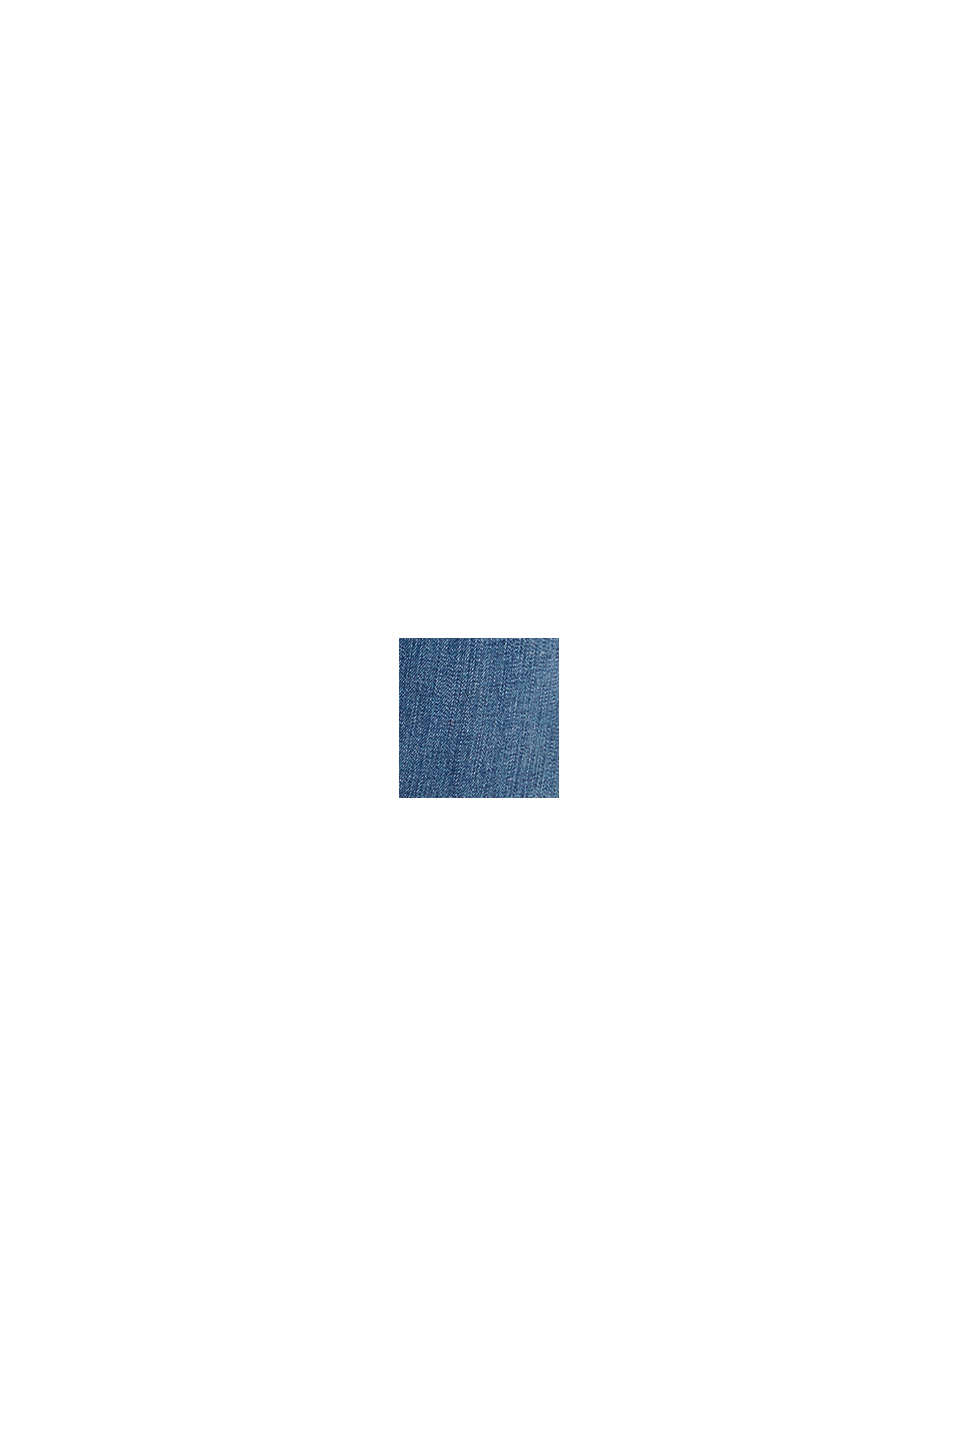 Jeans in cotone biologico con materiale riciclato, BLUE MEDIUM WASHED, swatch